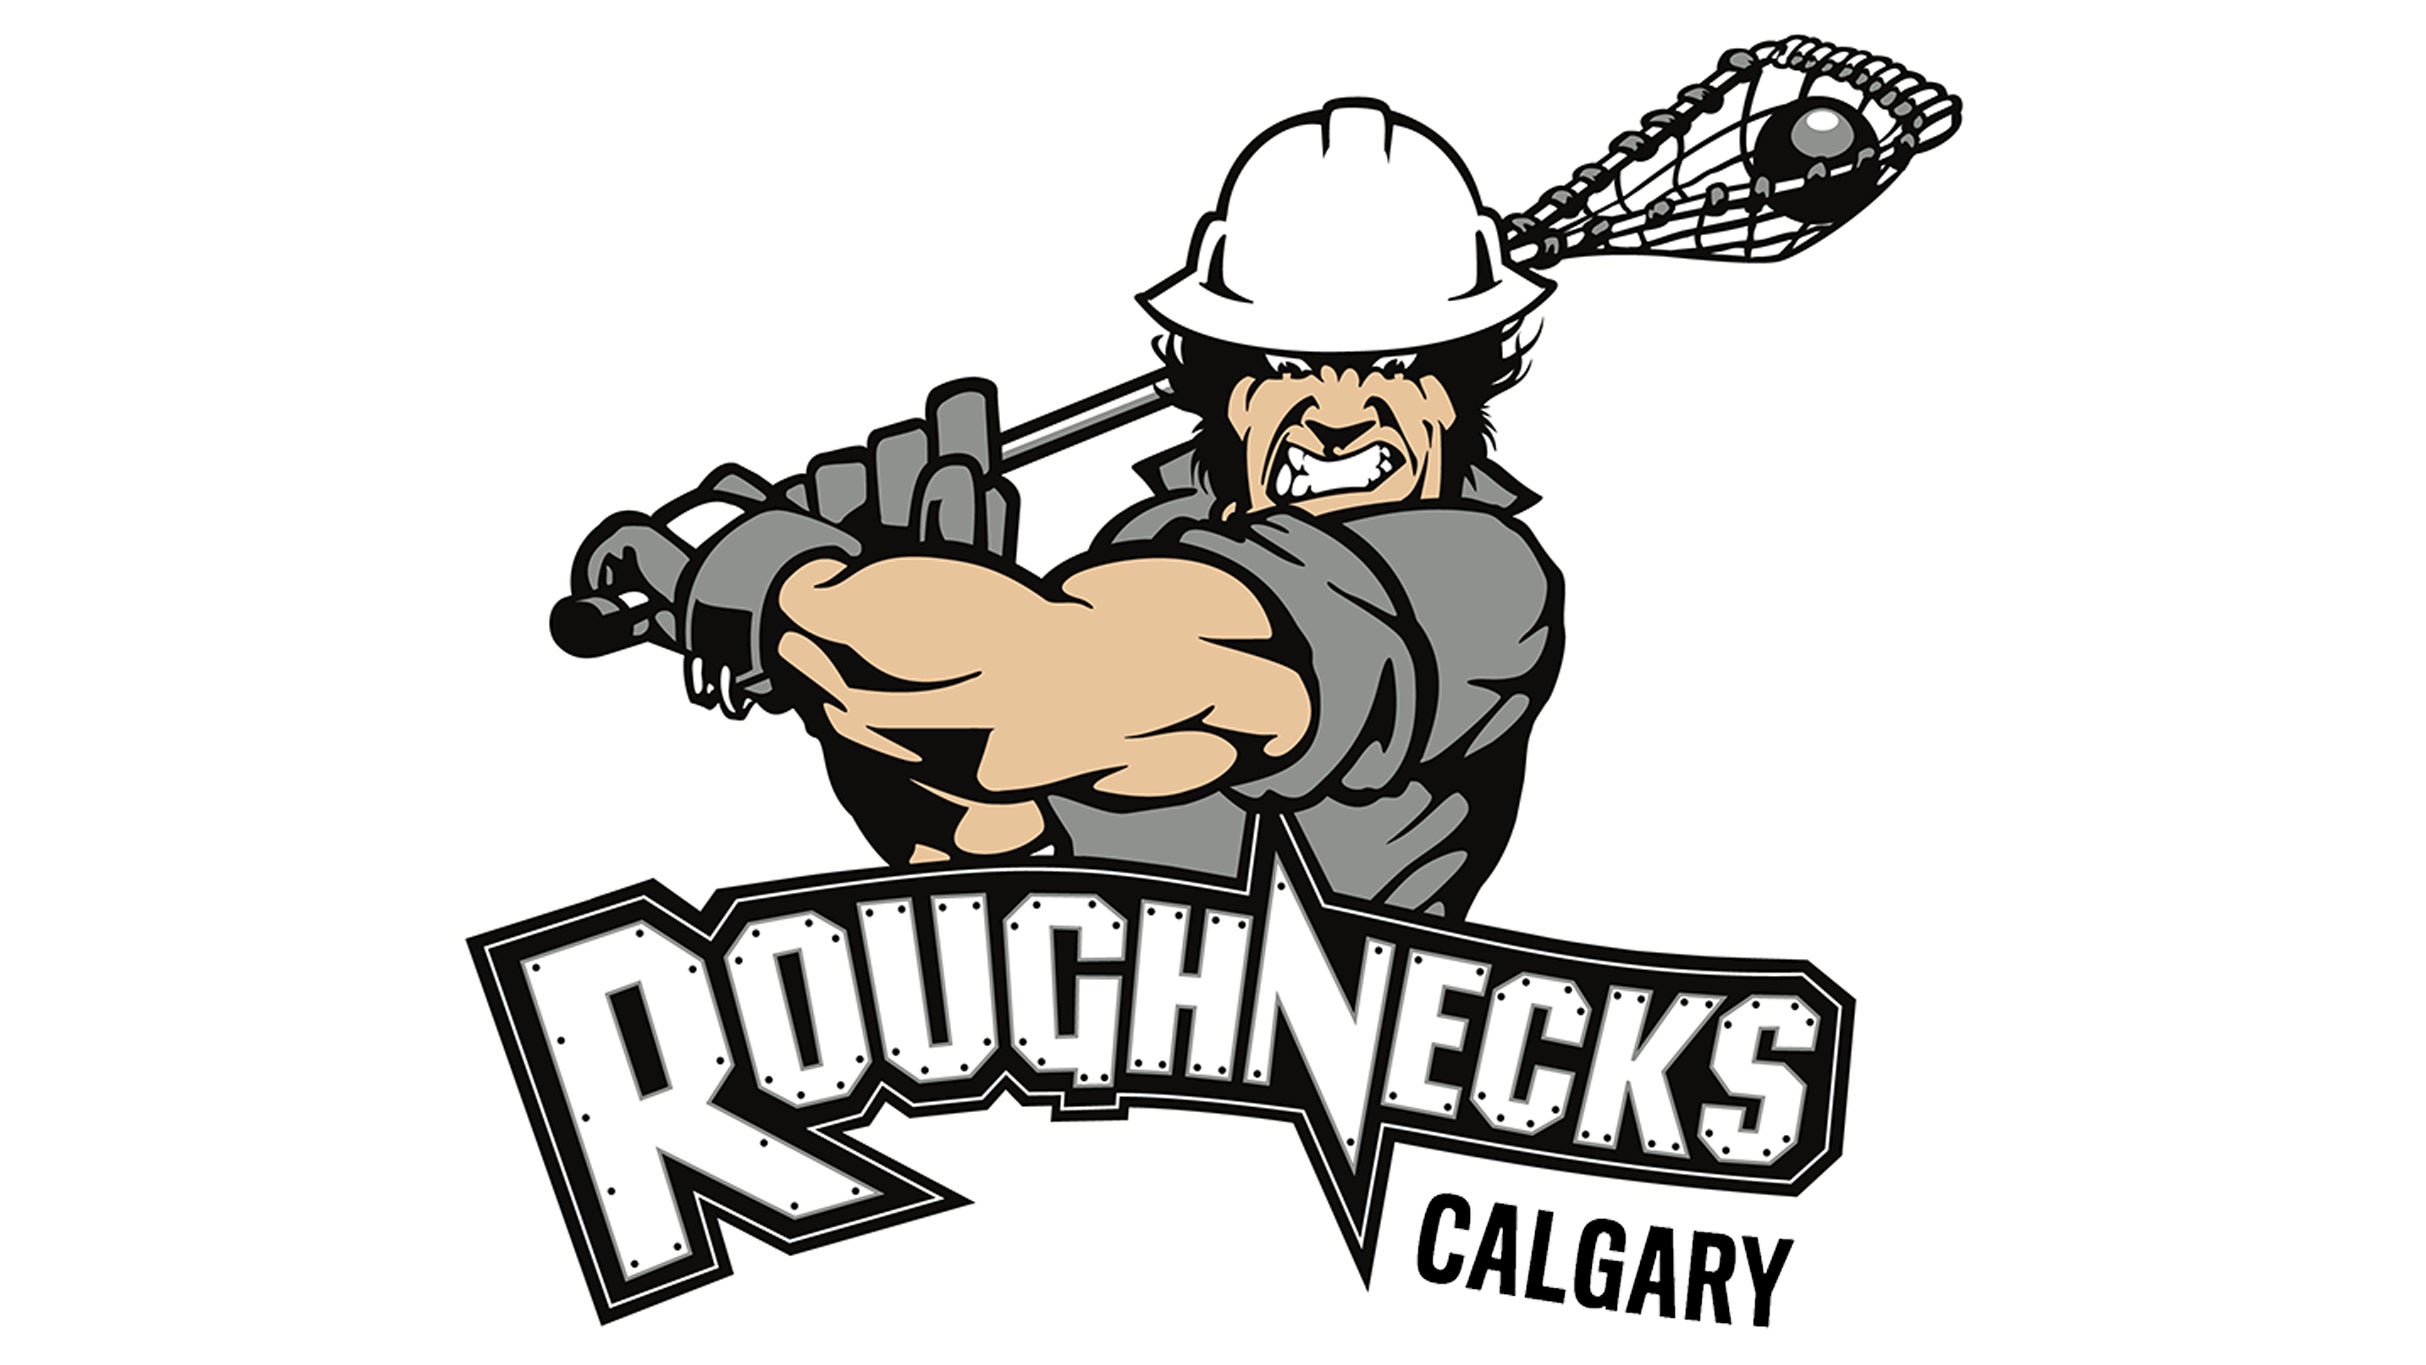 Calgary Roughnecks vs. Saskatchewan Rush in Calgary promo photo for Black Friday  presale offer code